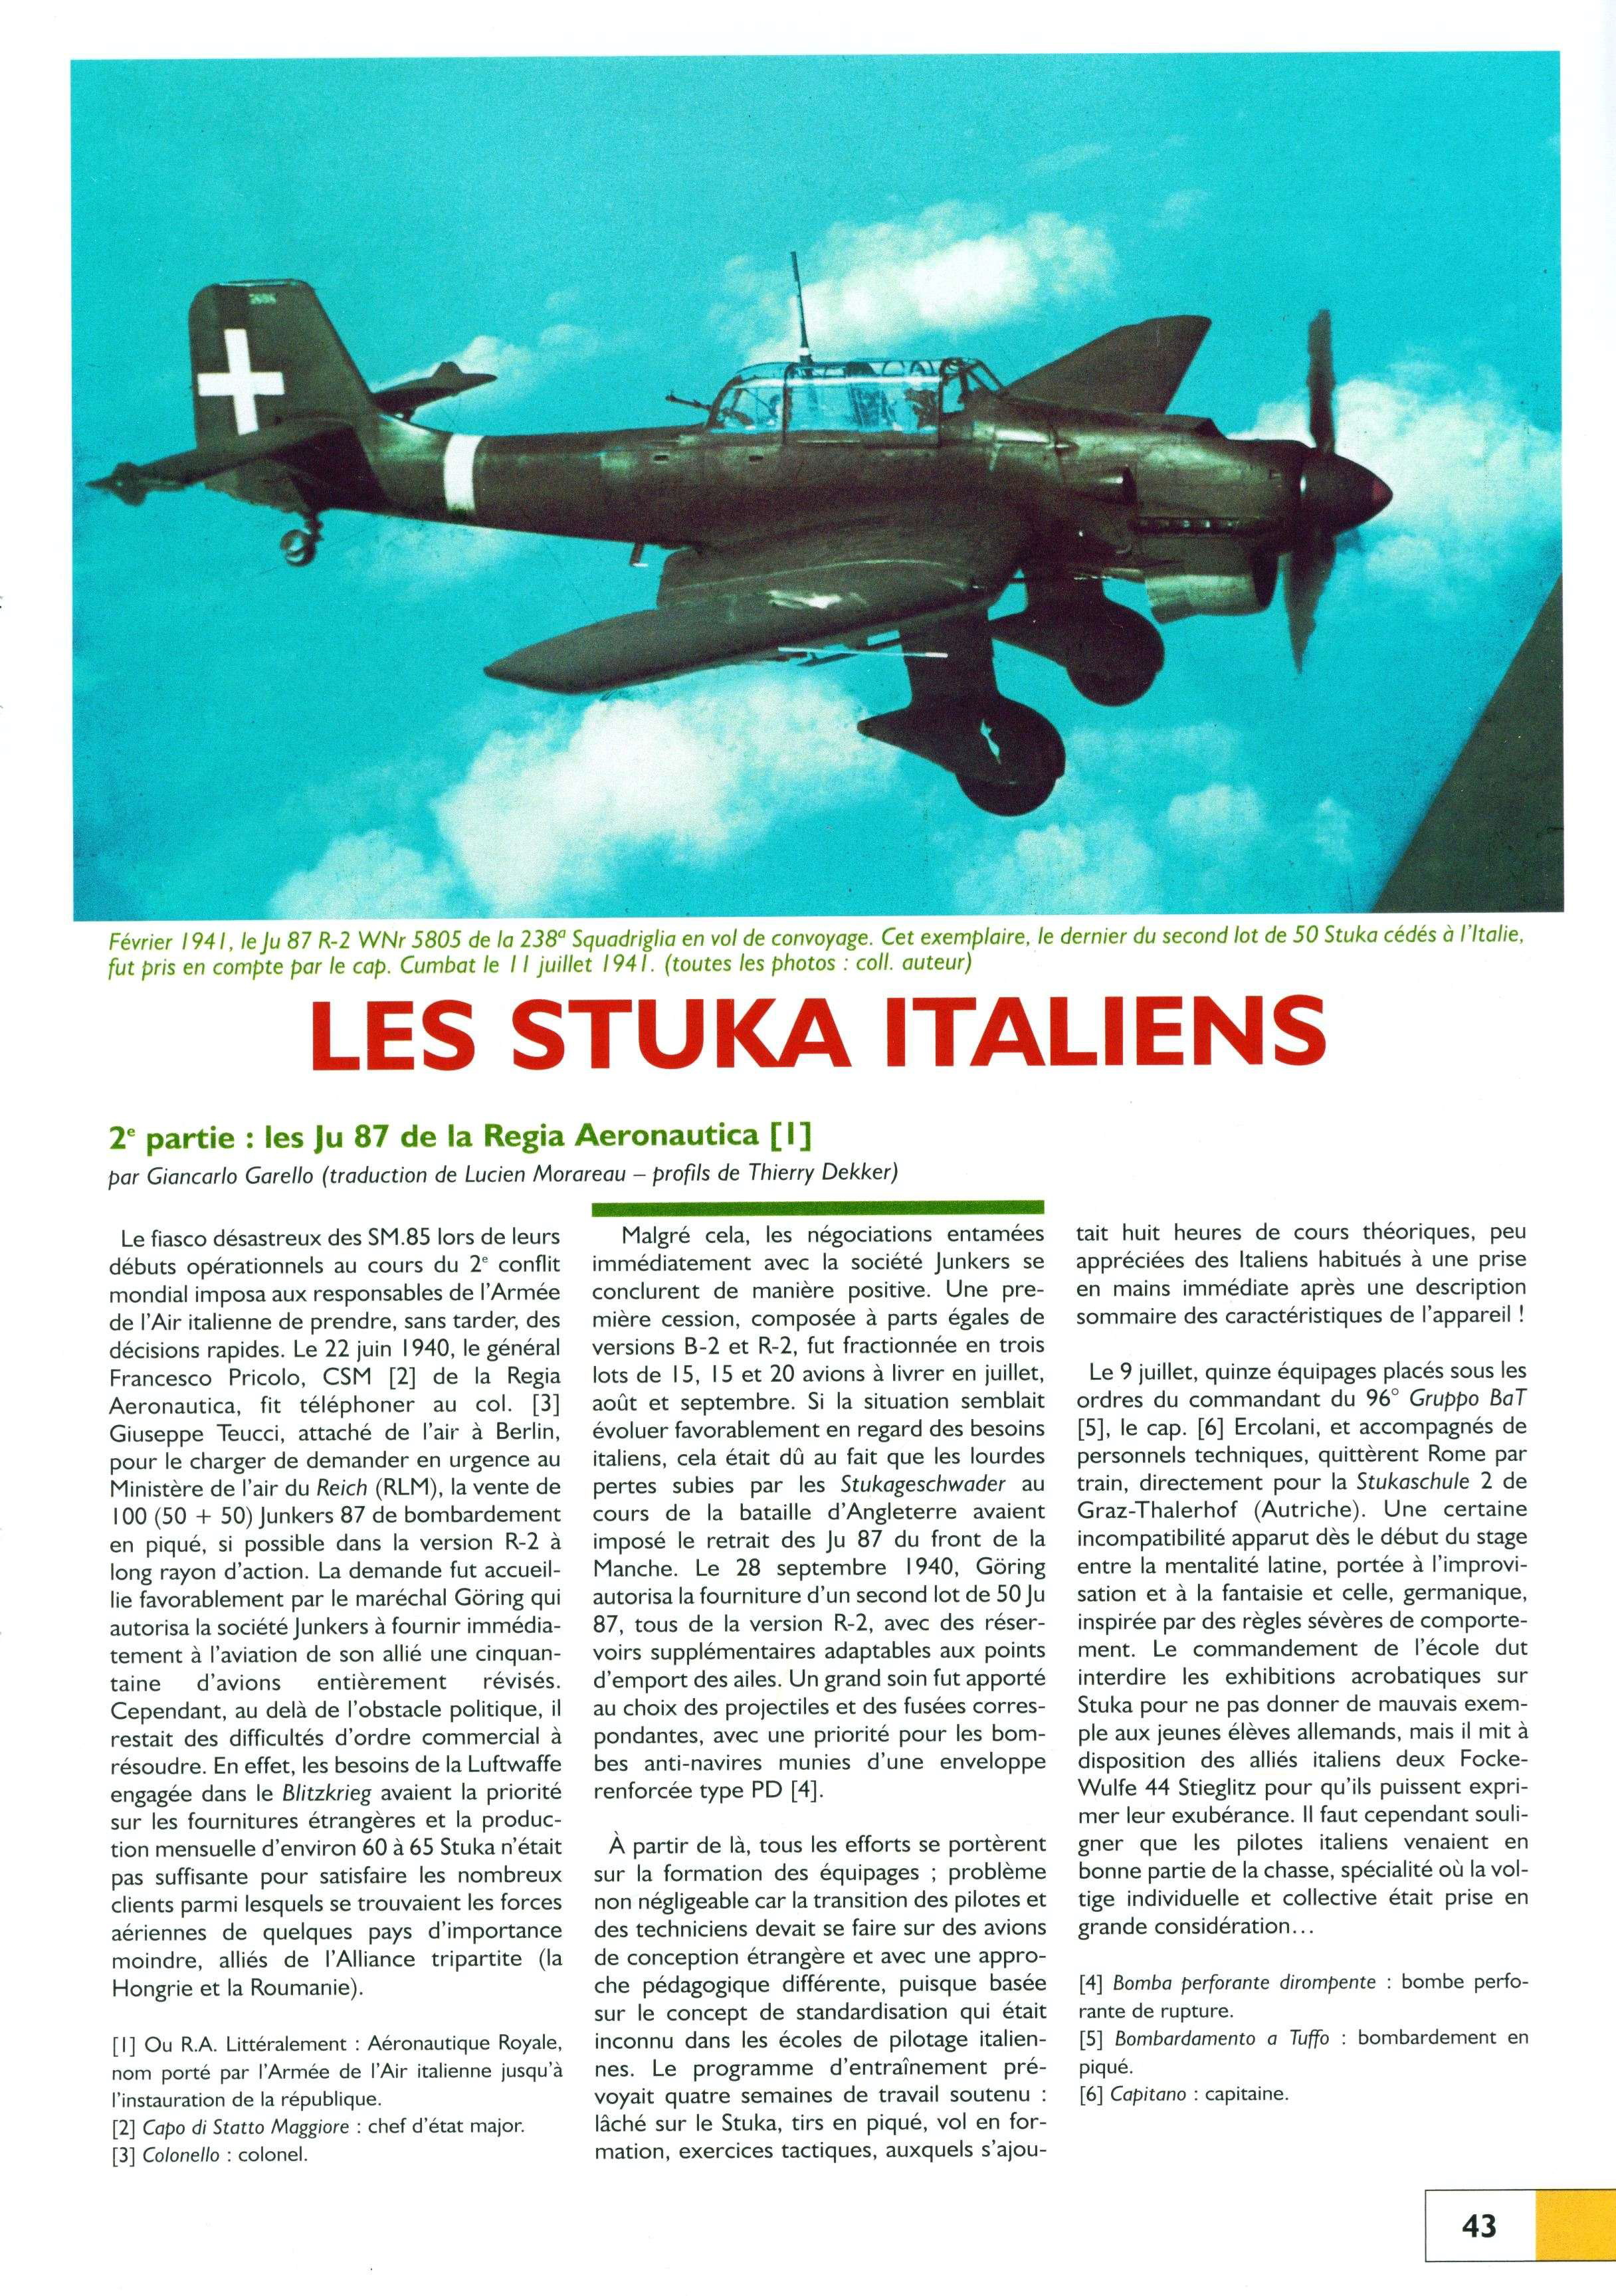 Junkers Ju 87 Picchiatello RA article by Avions 160 page 43